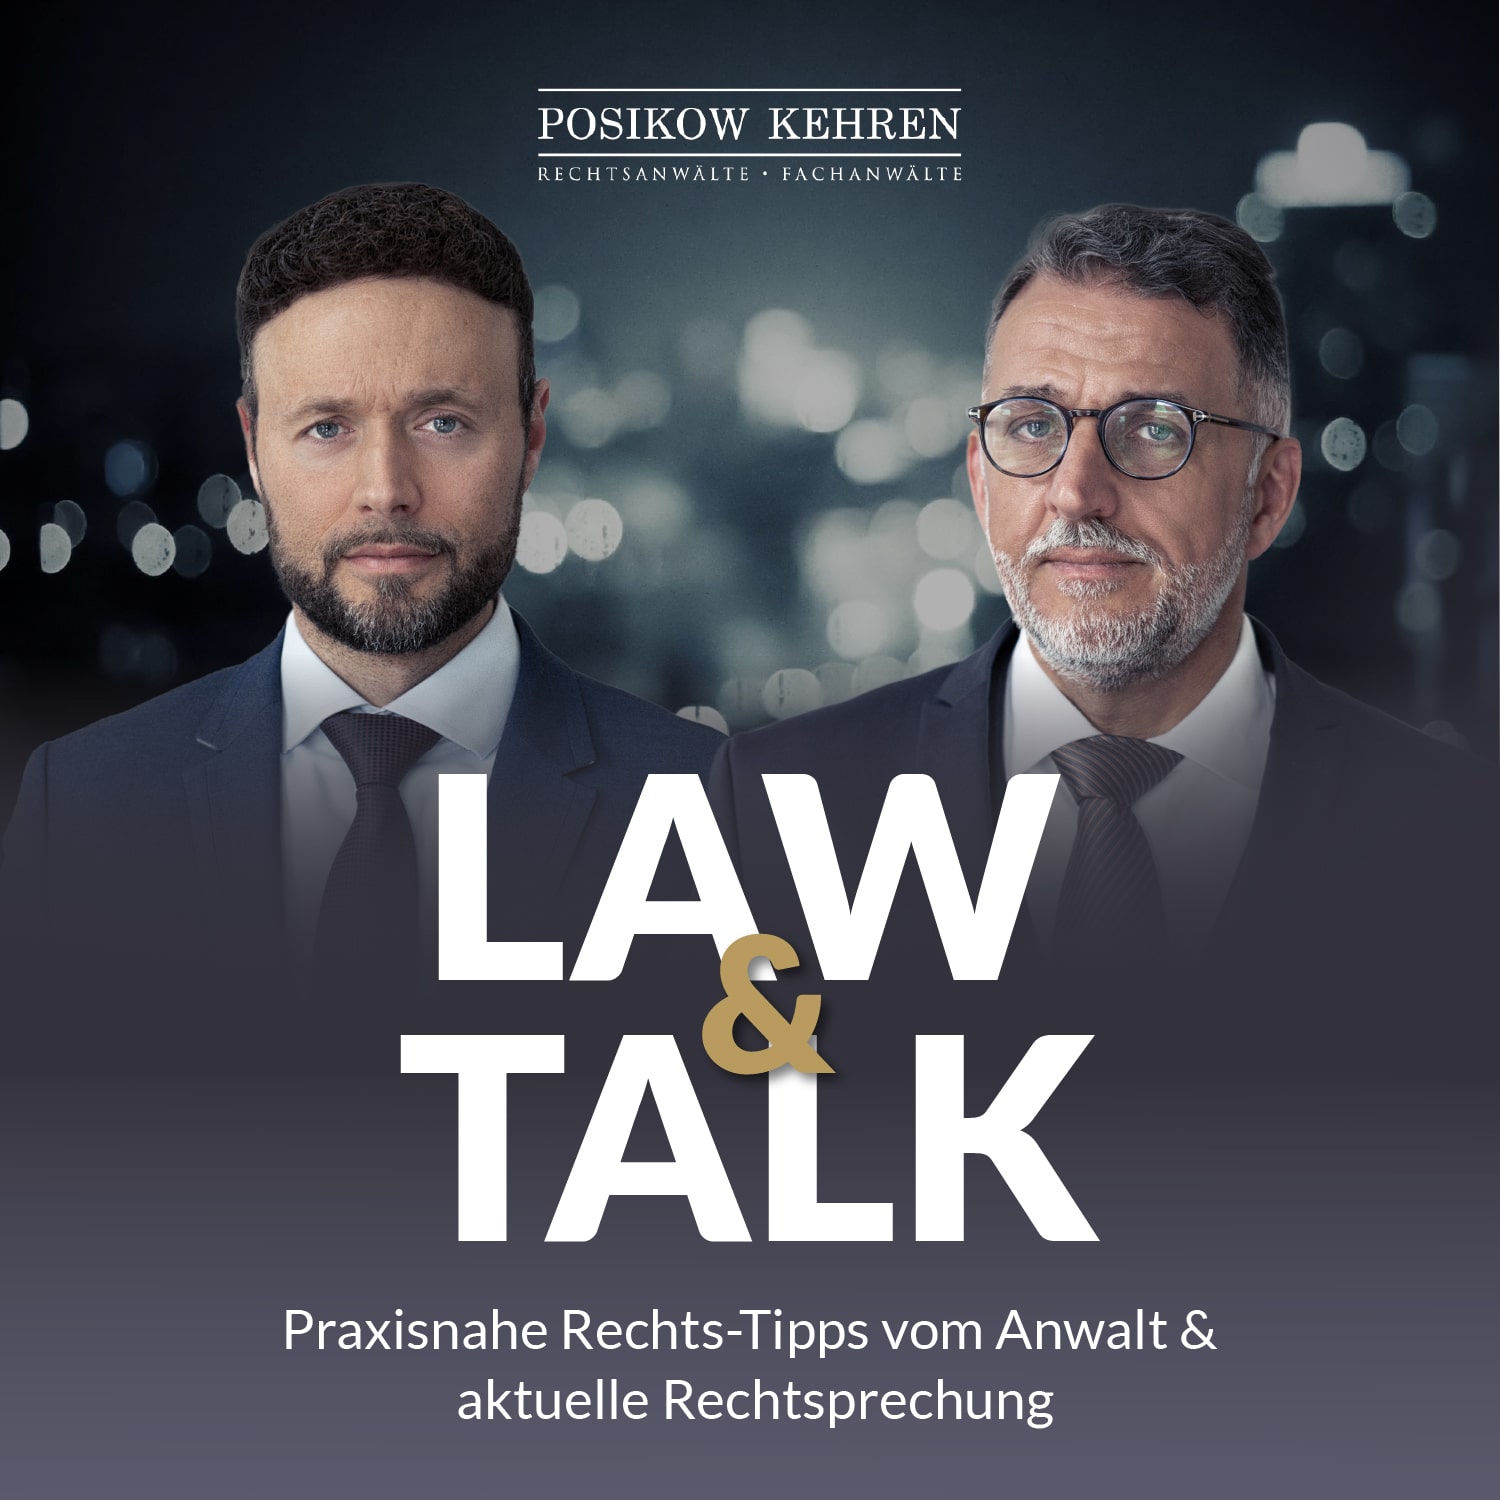 Law & Talk – Praxisnahe Rechts-Tipps vom Anwalt und aktuelle Rechtsprechung